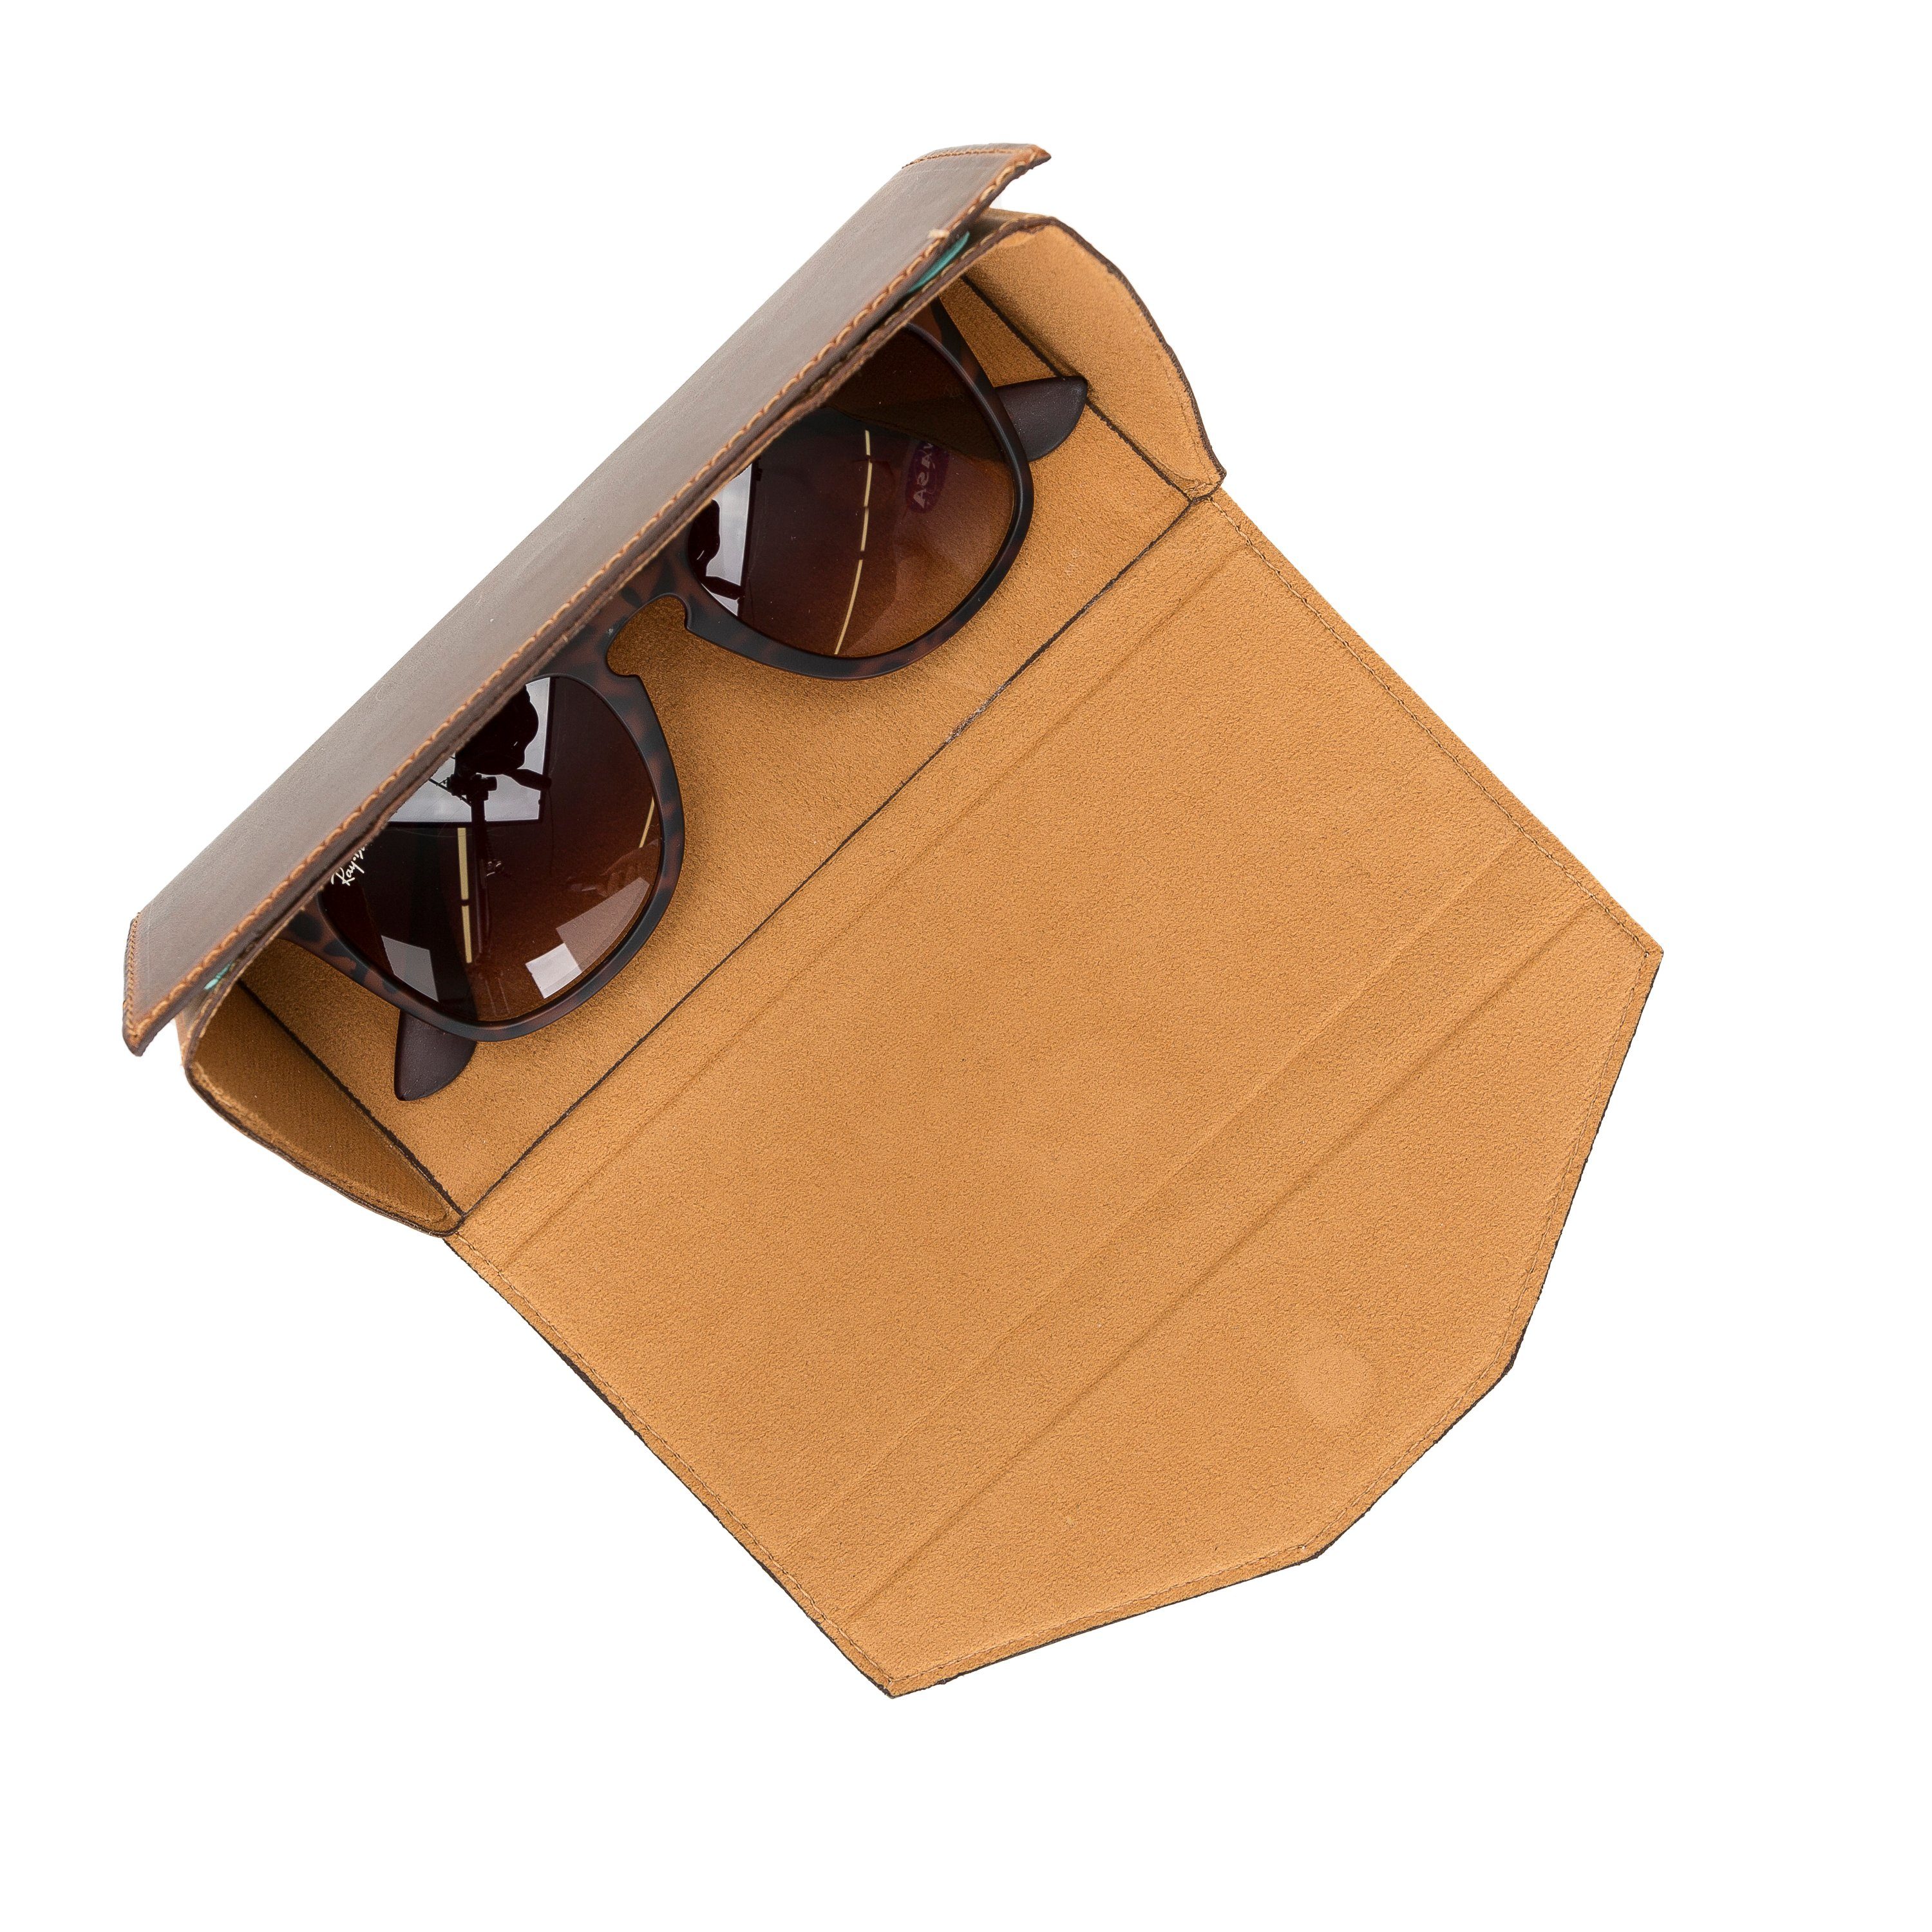 Vintage echtem Braun Pelle Leder, aus Faltbares Brillenetui tragbare Brillenbox zum falten Solo Brillenetui